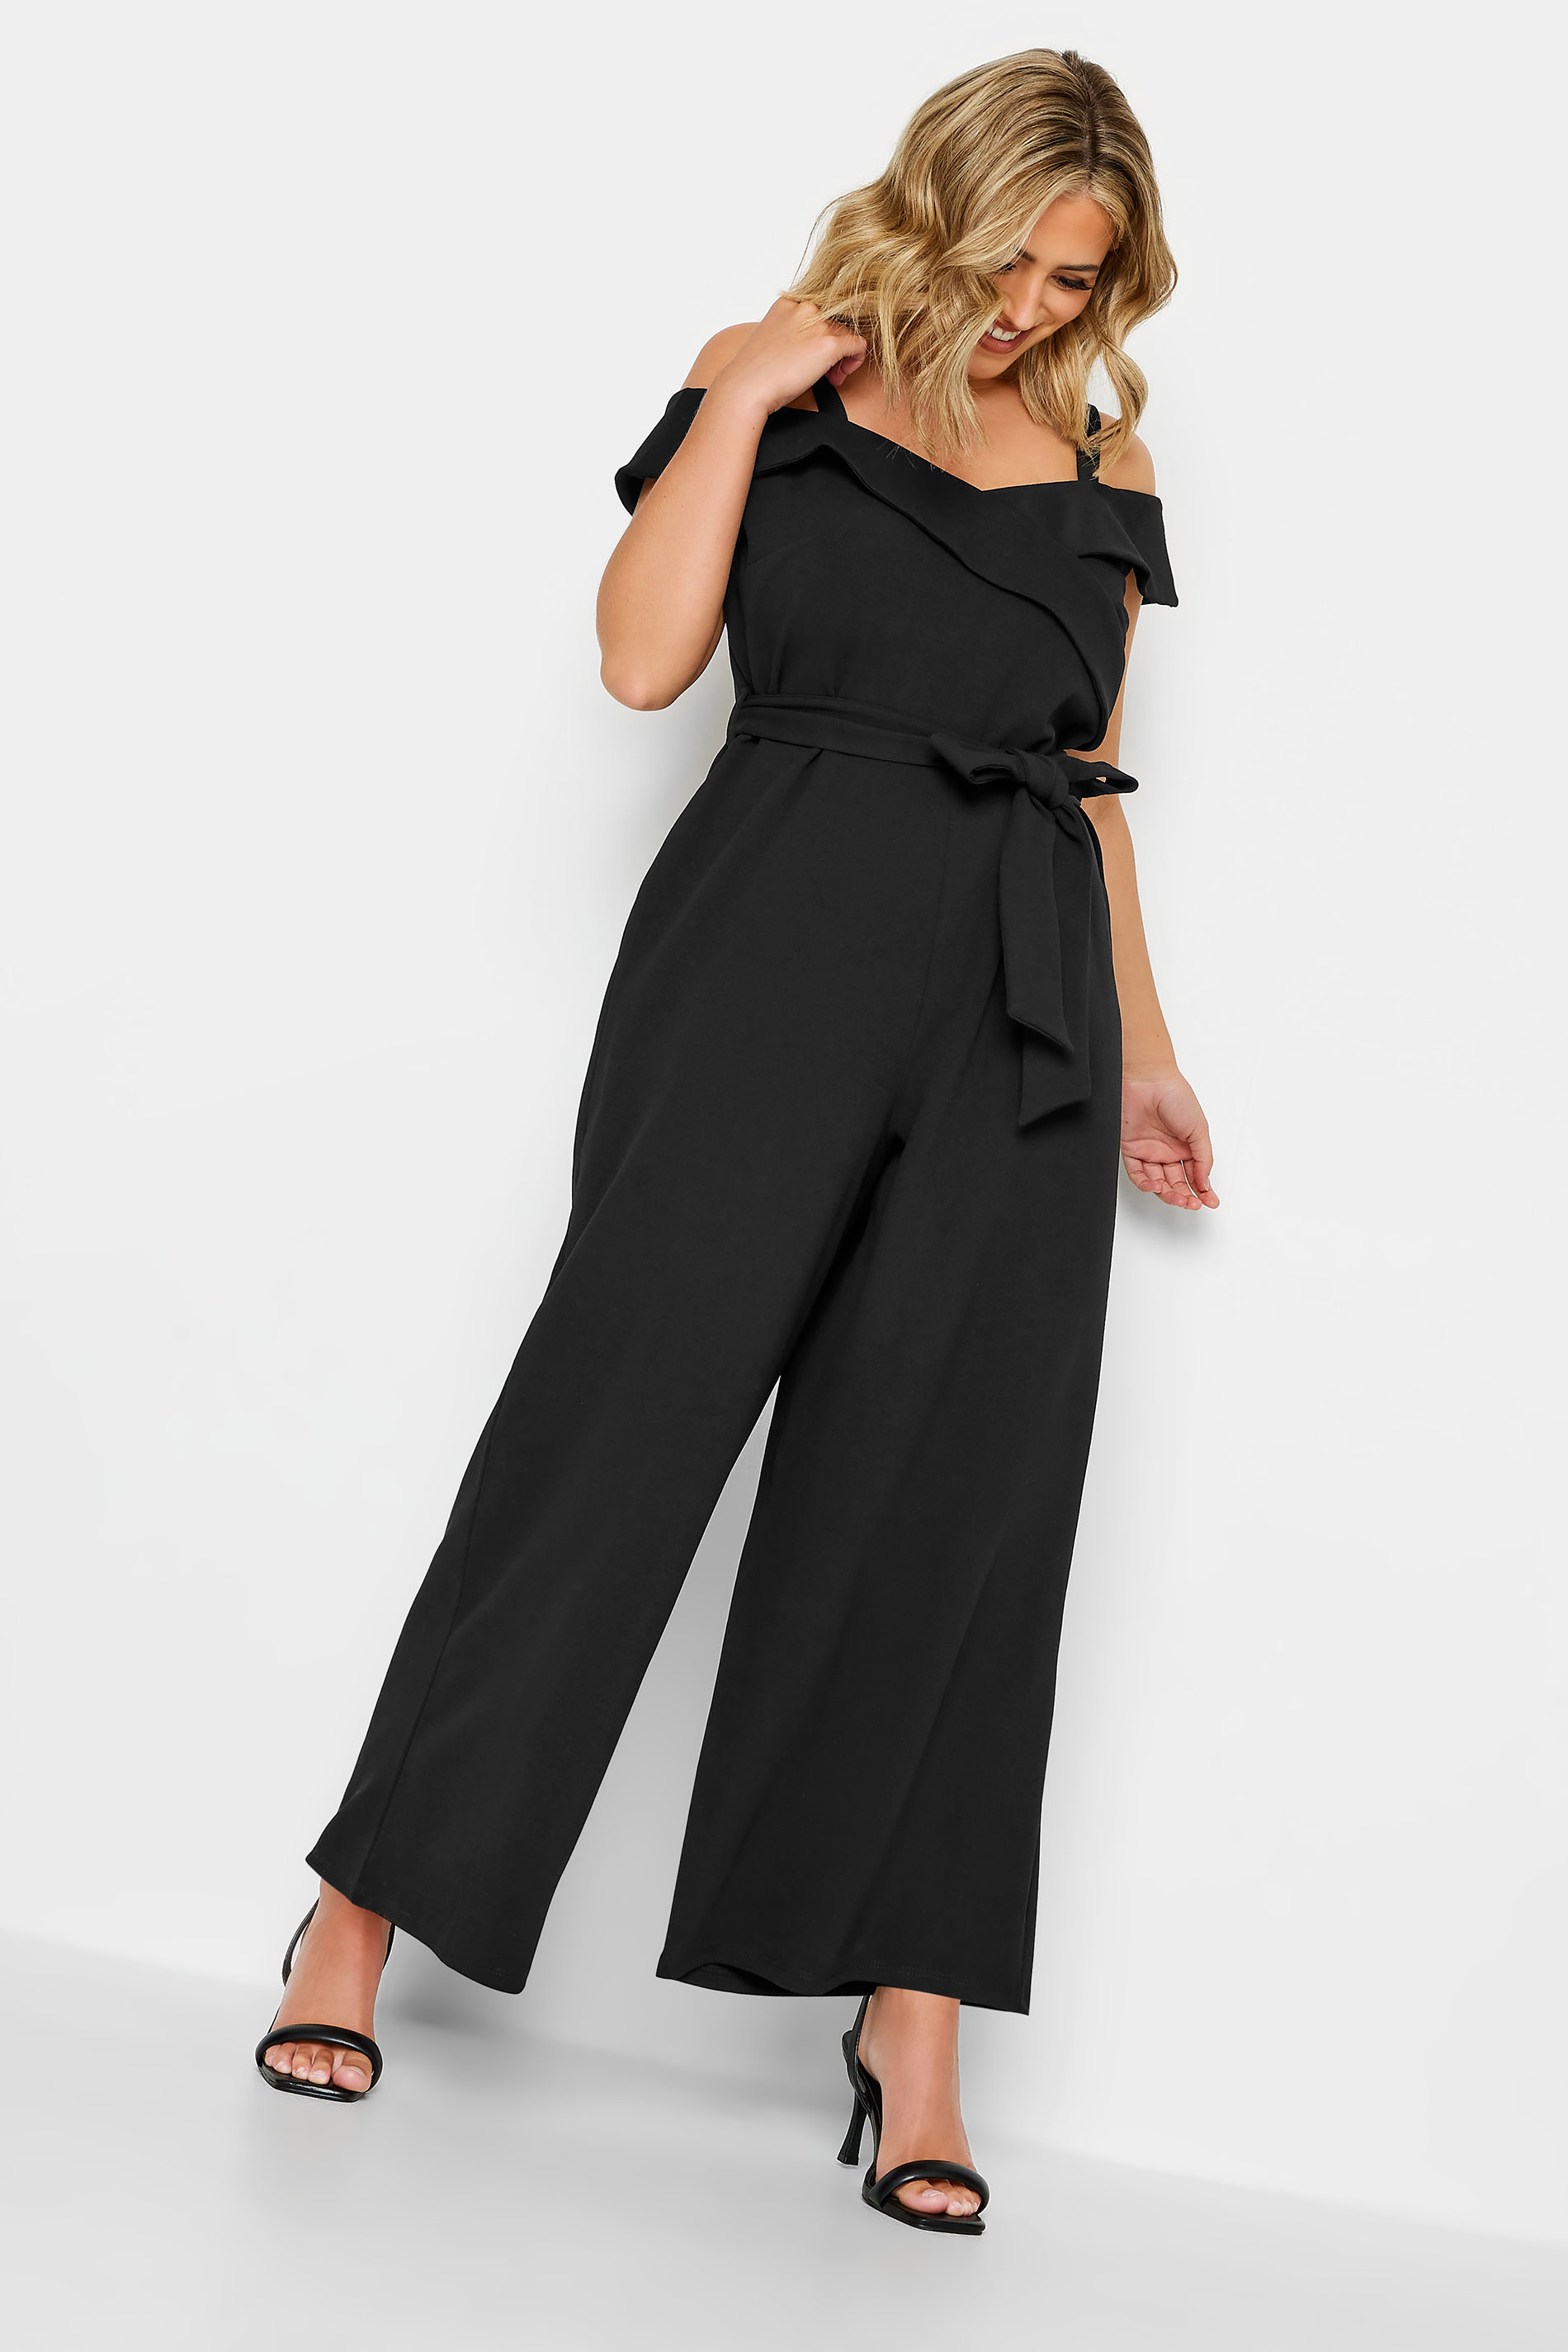 YOURS LONDON Plus Size Black Bardot Jumpsuit | Yours Clothing 2